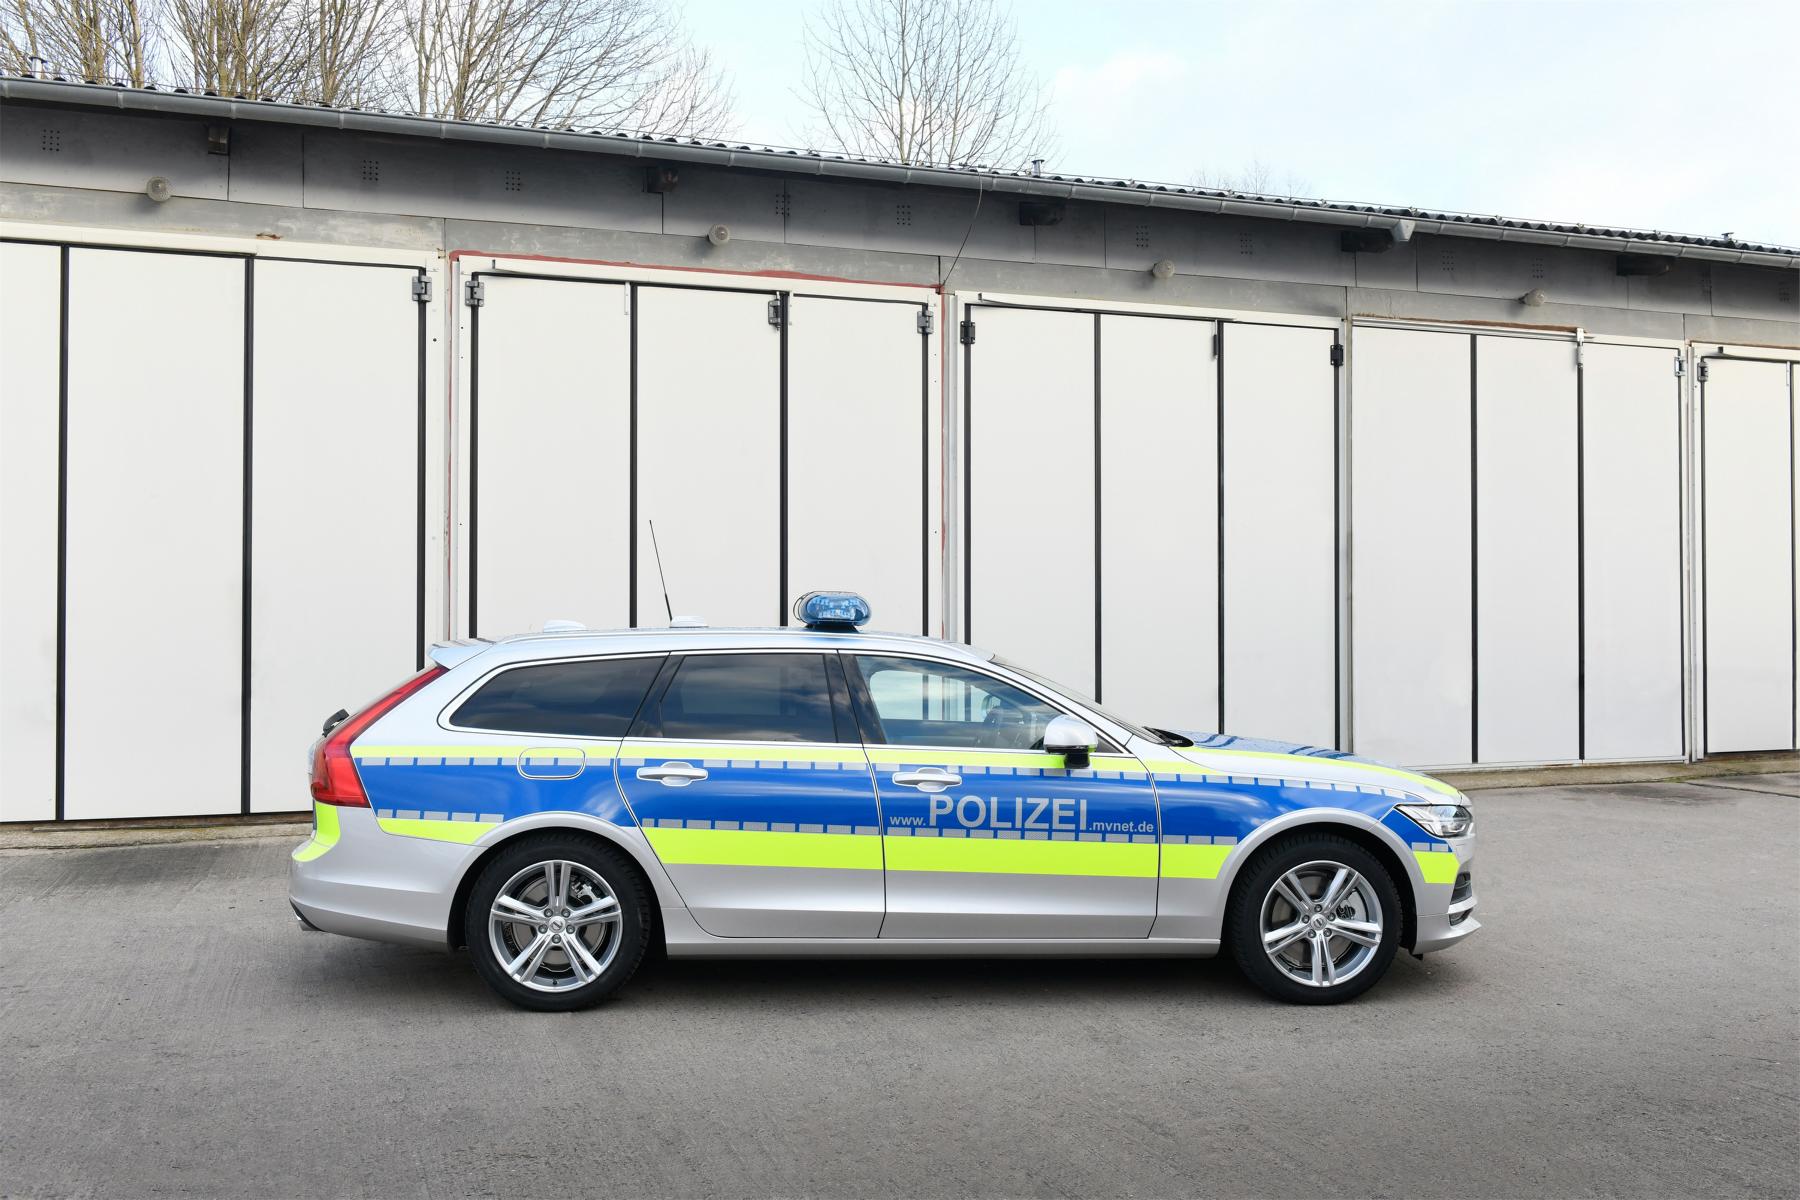 K1600 217506 Auf Streife im Volvo V90 Premium Kombi ab sofort als Polizeiauto im